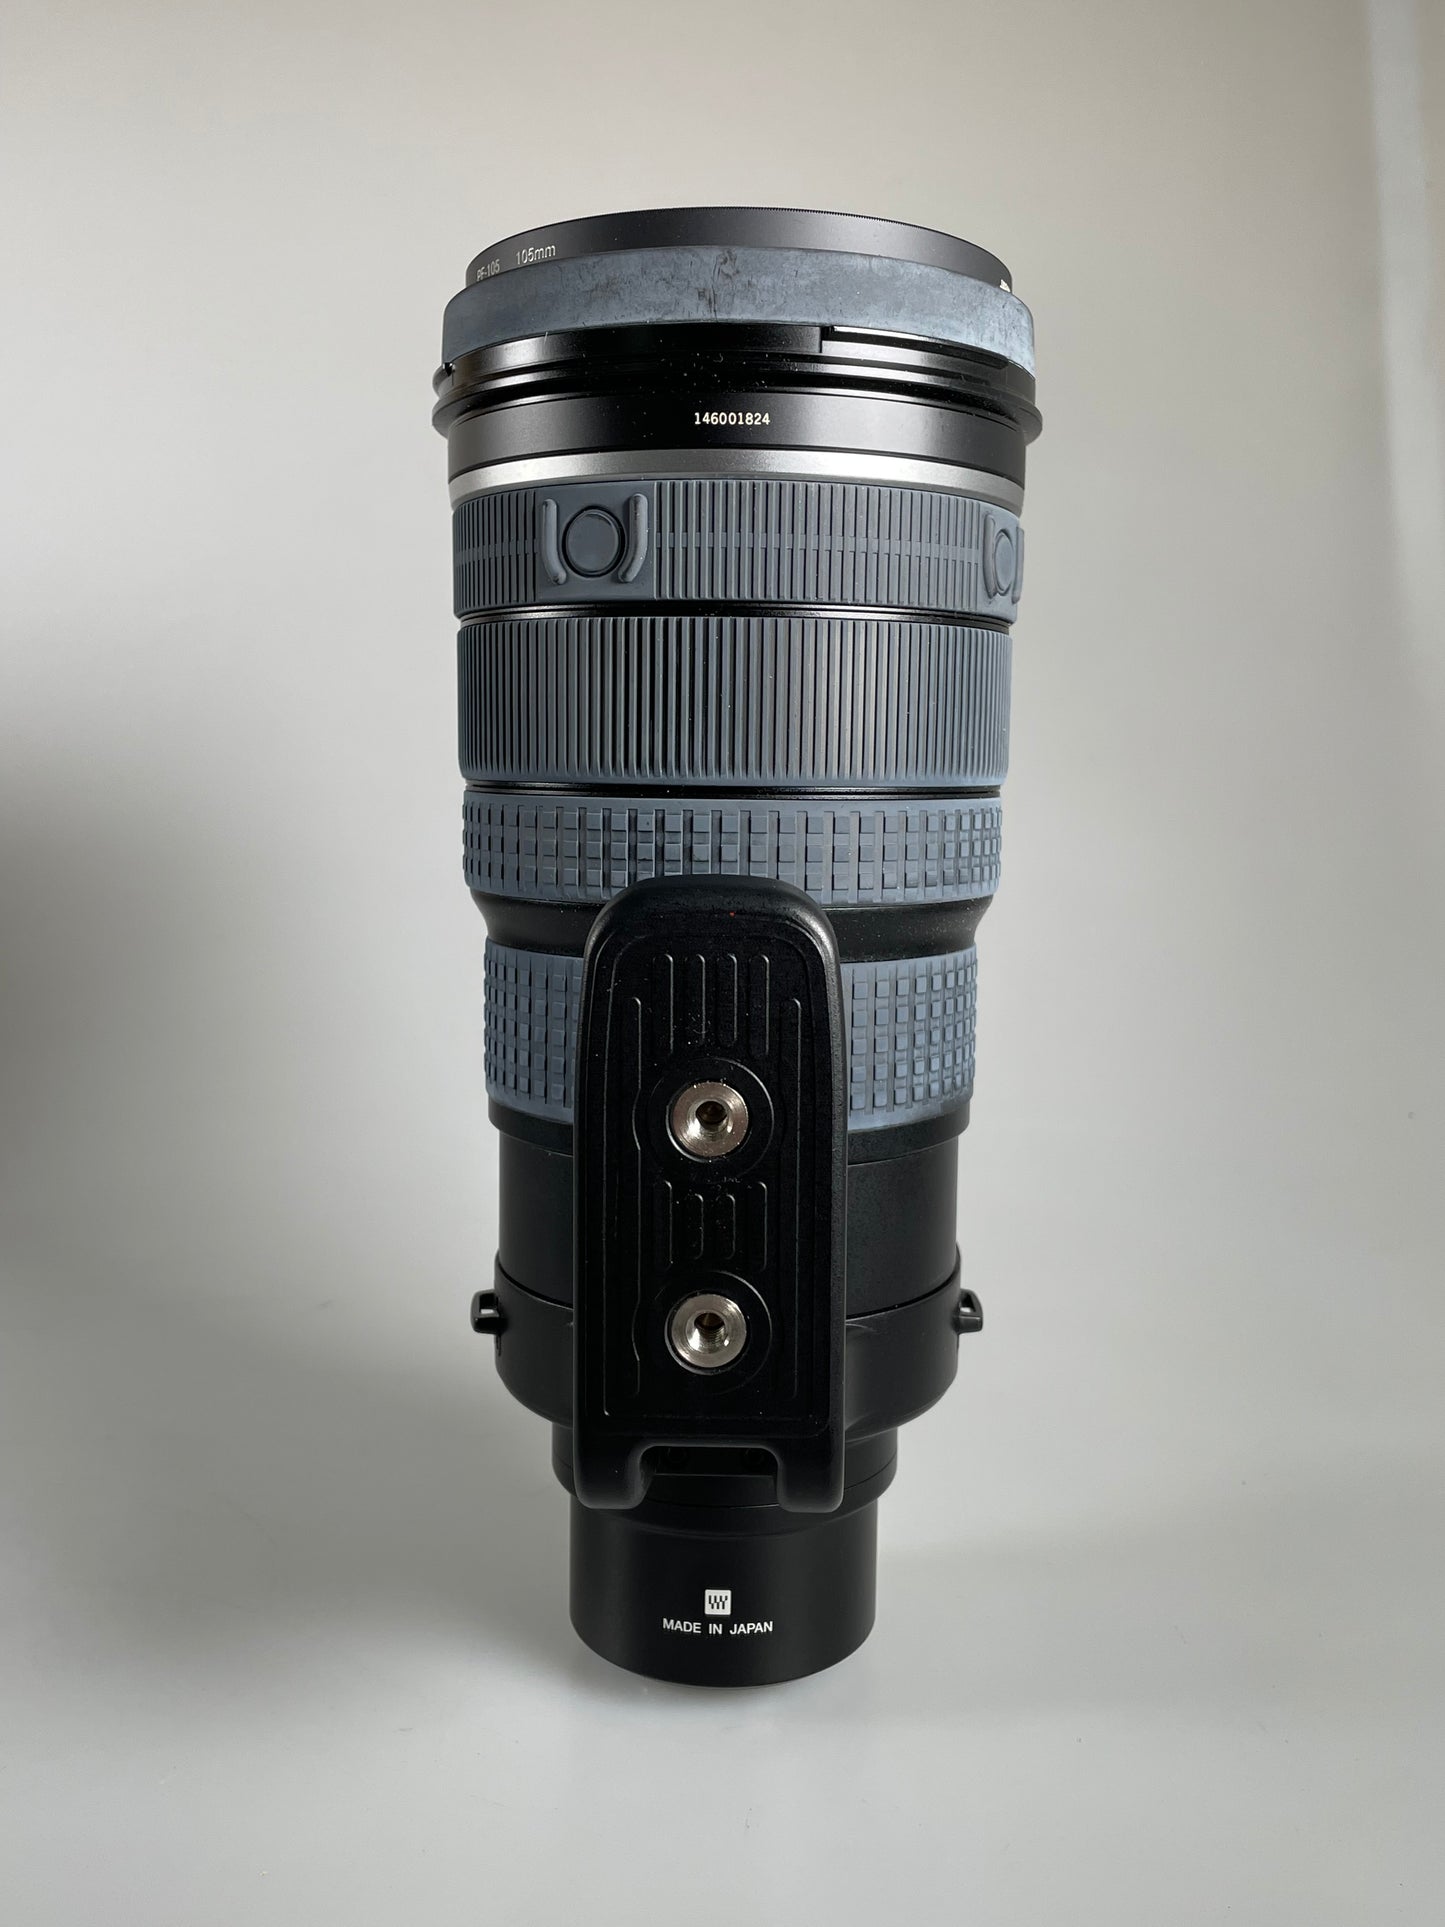 Olympus Zuiko Digital ED 90-250mm F2.8 For Four Thirds w/ PF-105 105mm UV filter